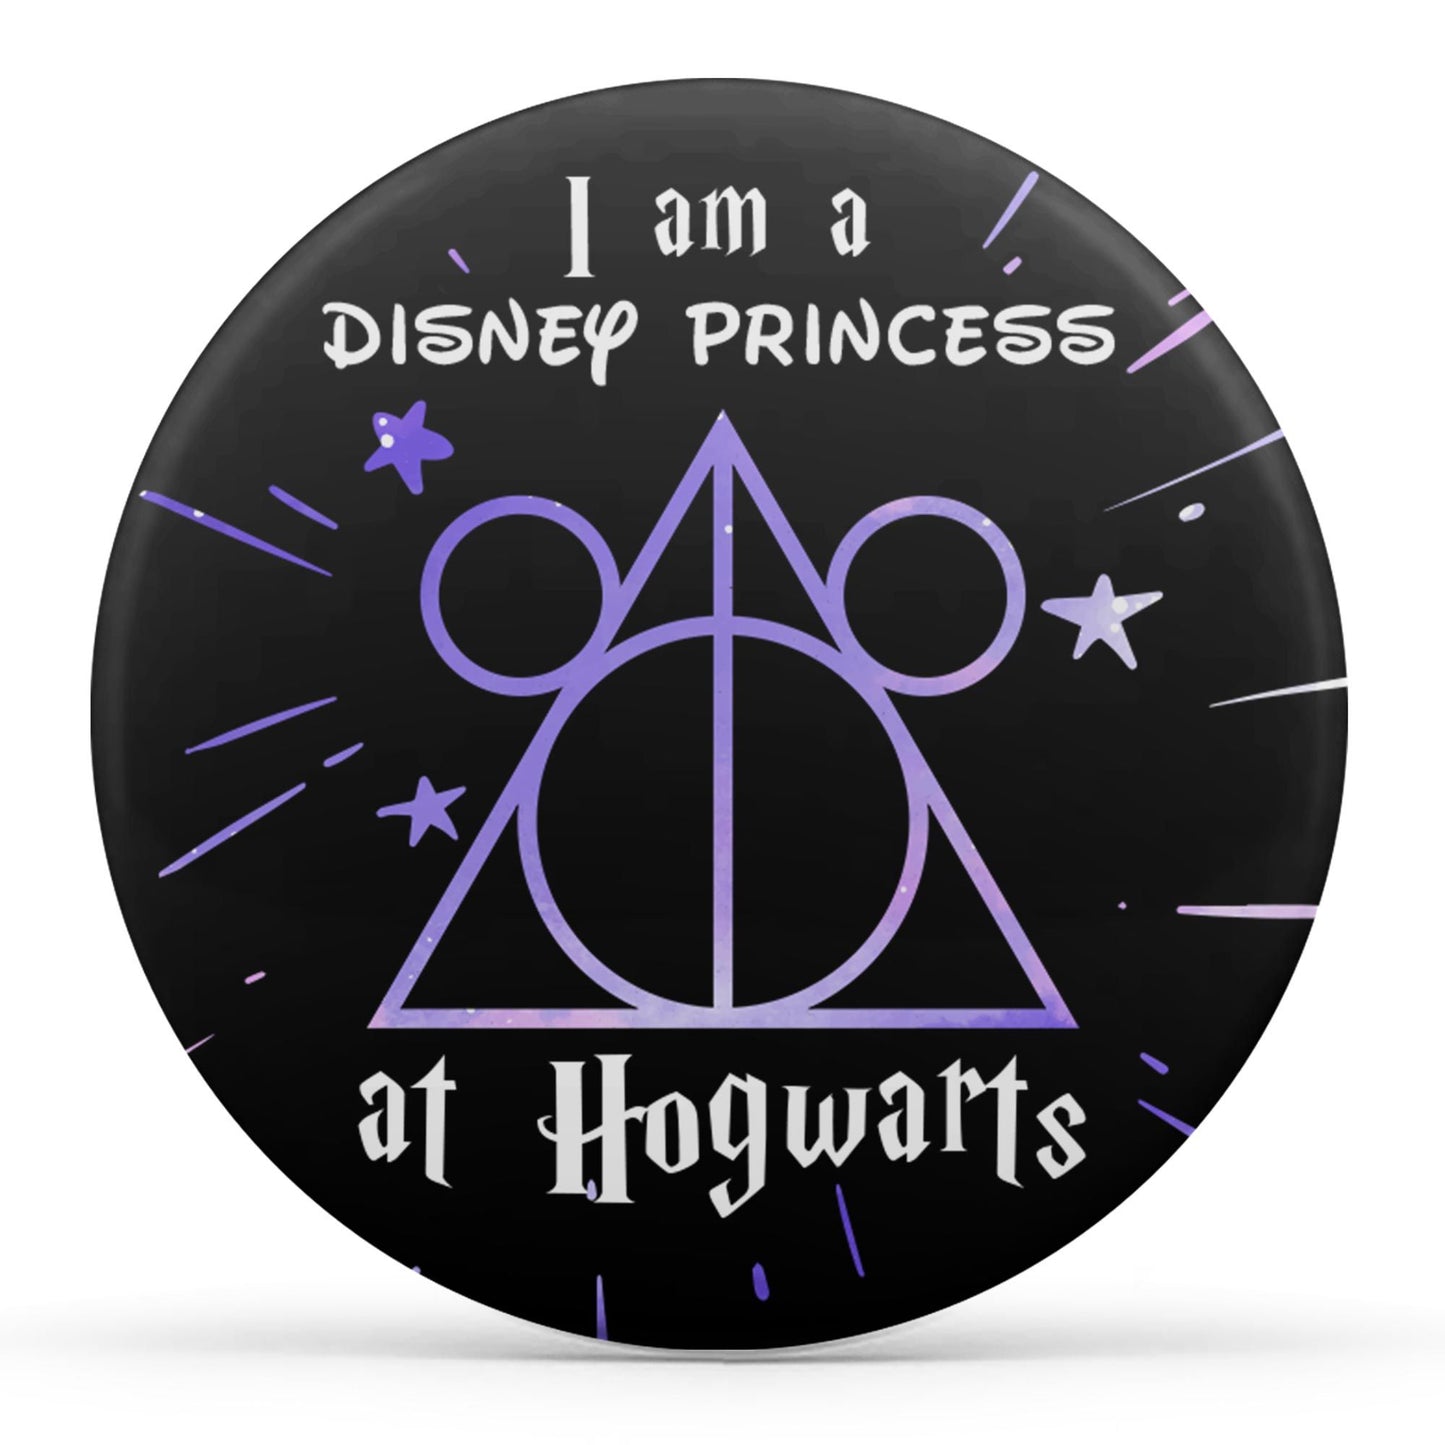 I'm a Disney Princess at Hogwarts Image